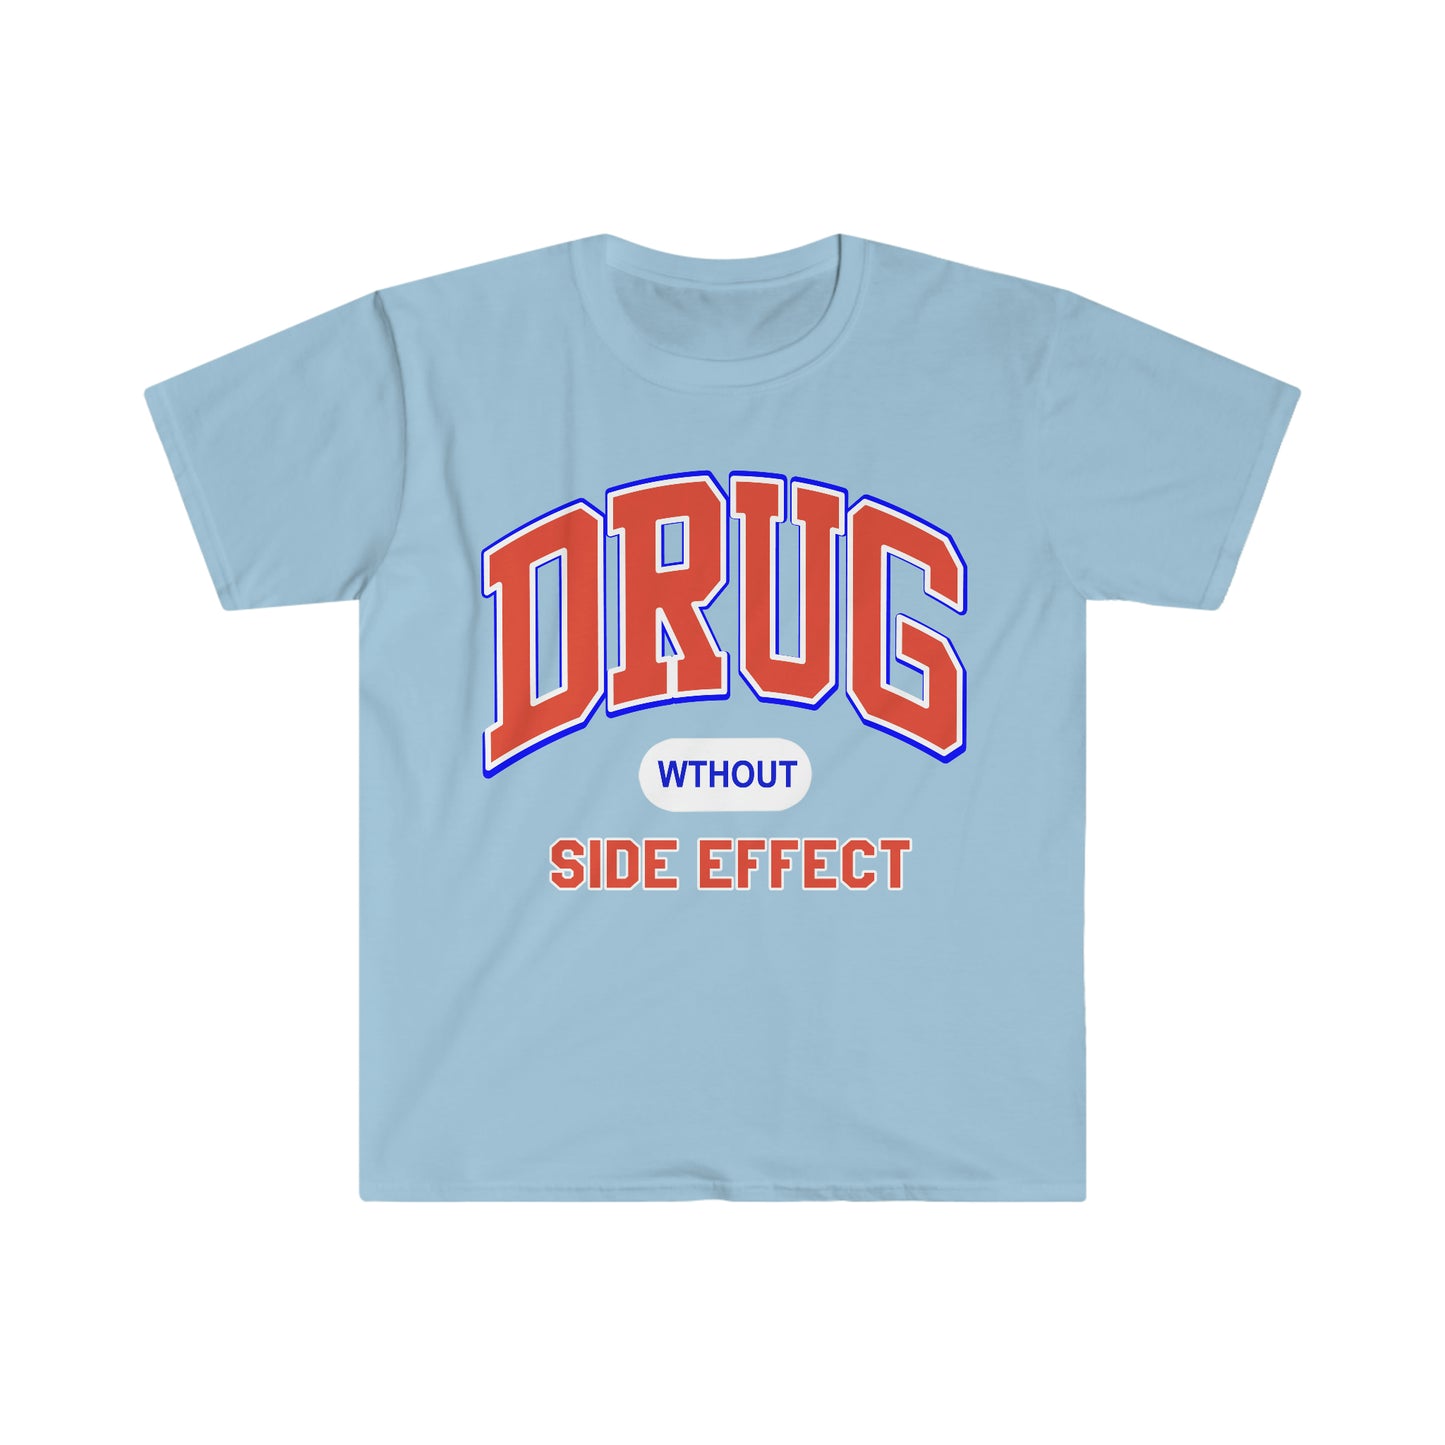 Drug Wthout Side Effect.